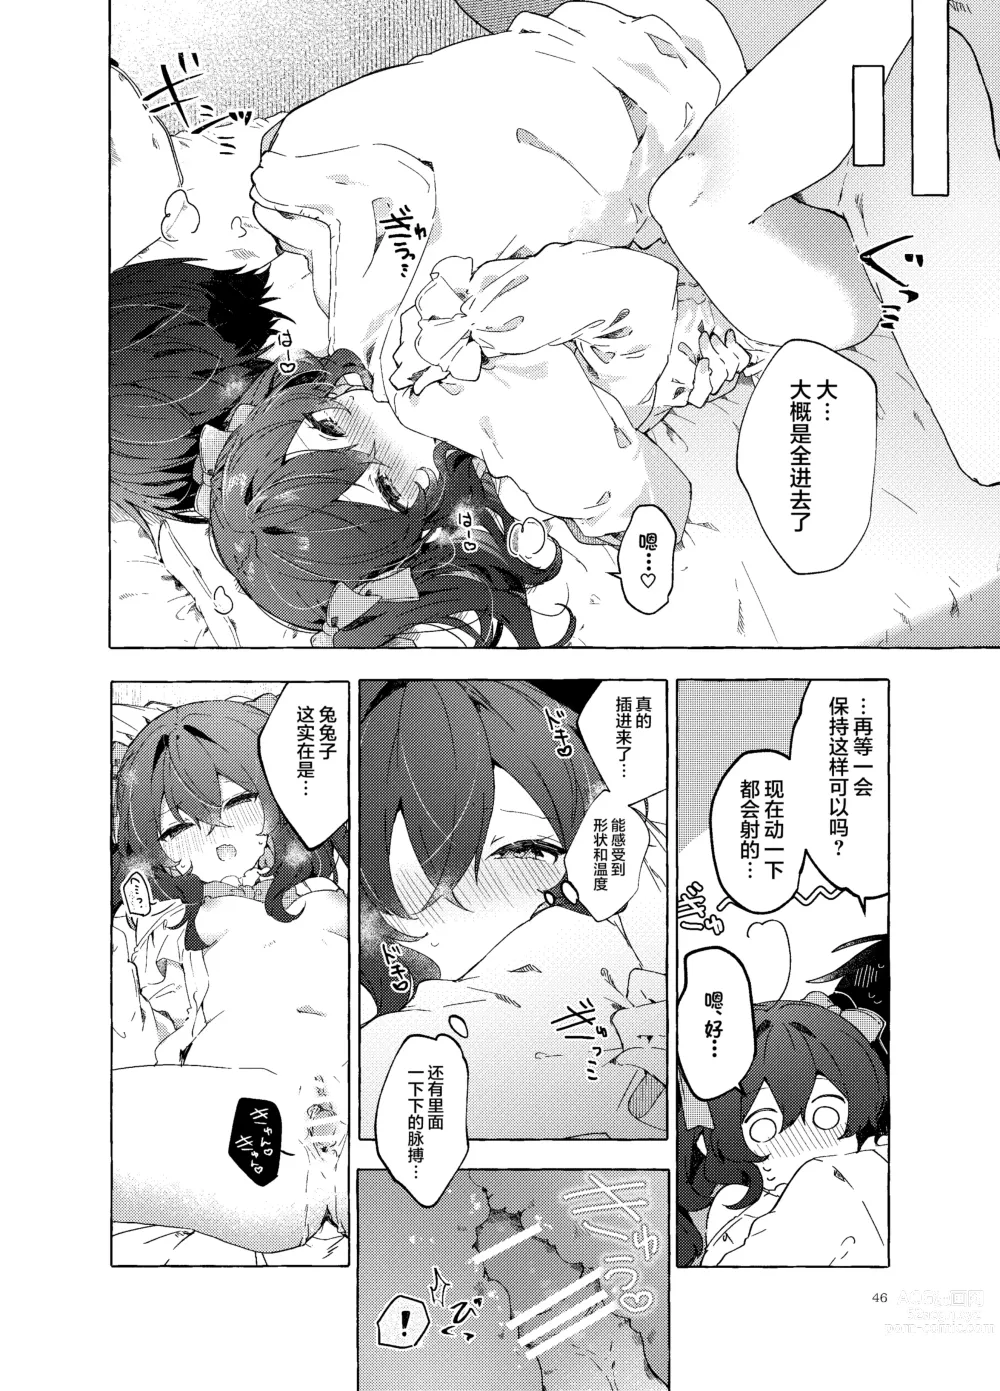 Page 48 of doujinshi Koi to Mahou to Etcetera - Love, Magic, and etc.